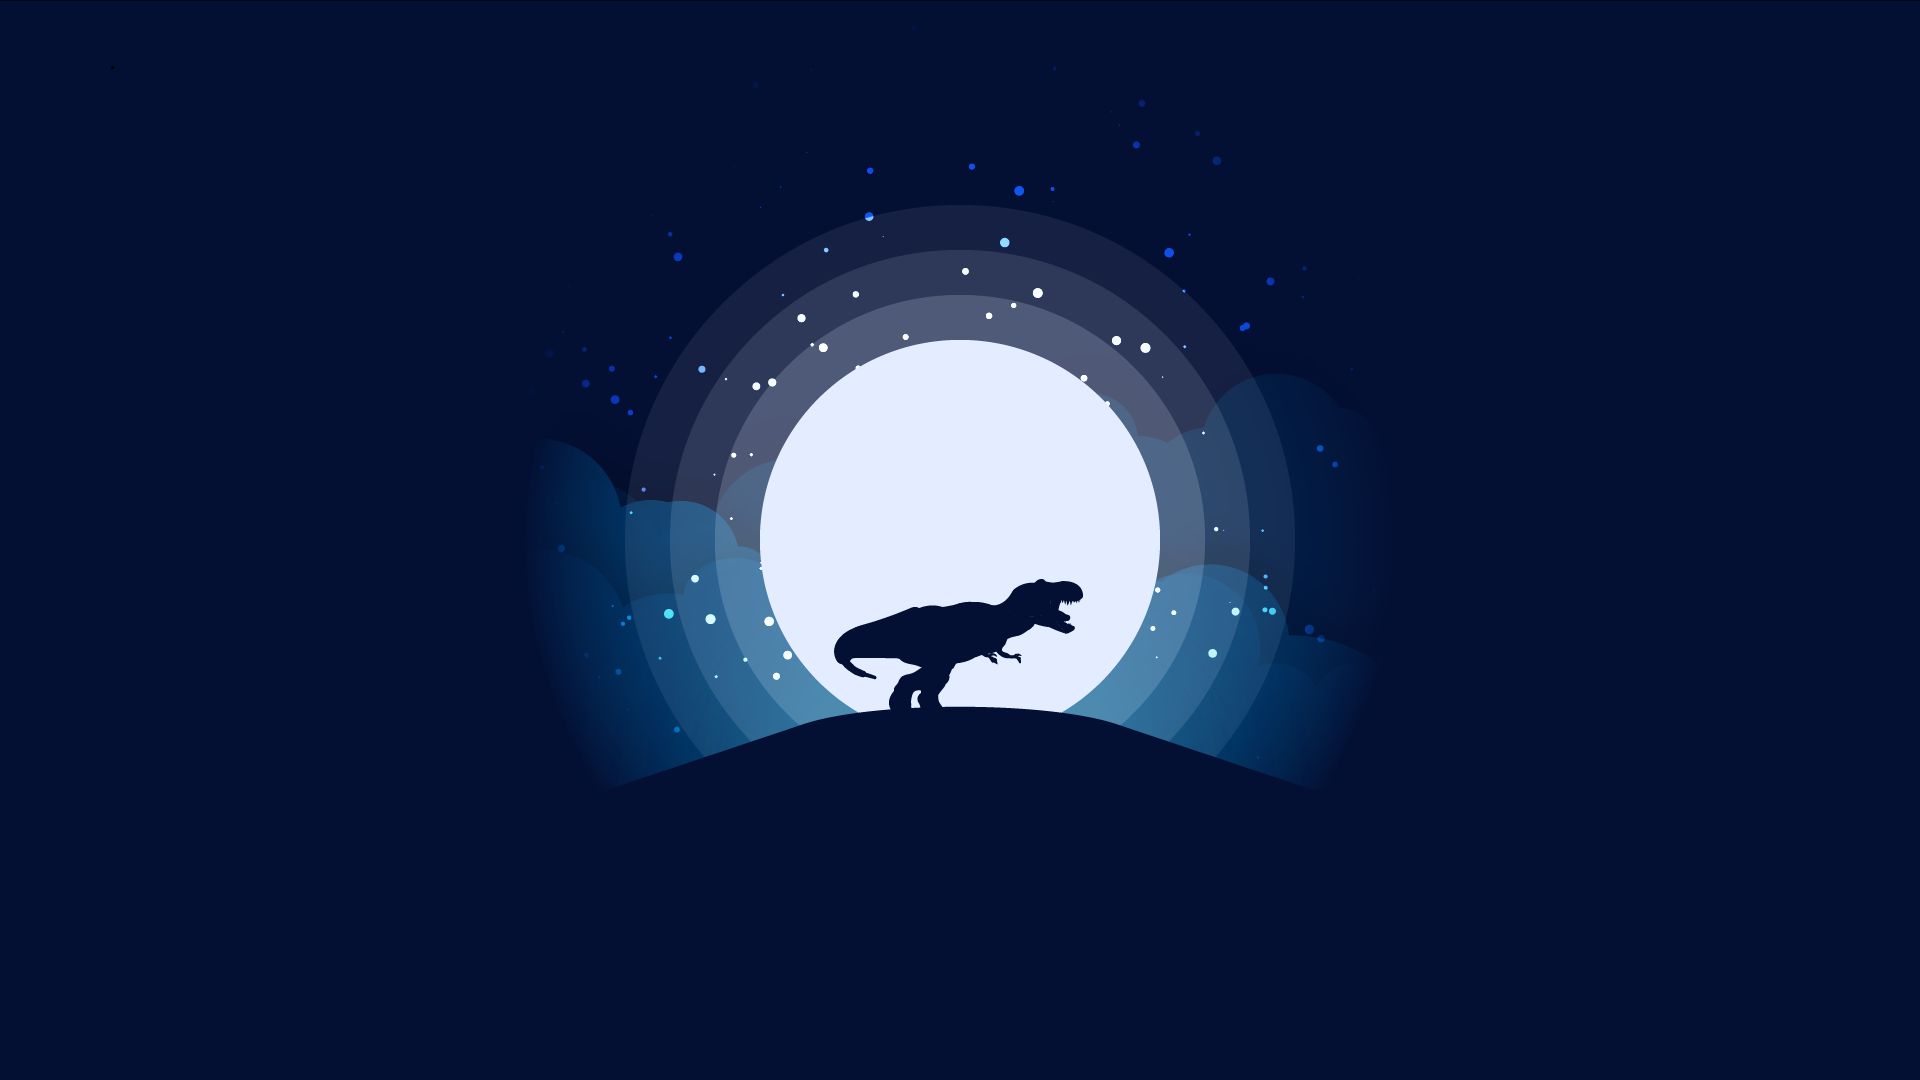 432148 descargar imagen dinosaurios, animales, tirano saurio rex, luna, noche: fondos de pantalla y protectores de pantalla gratis